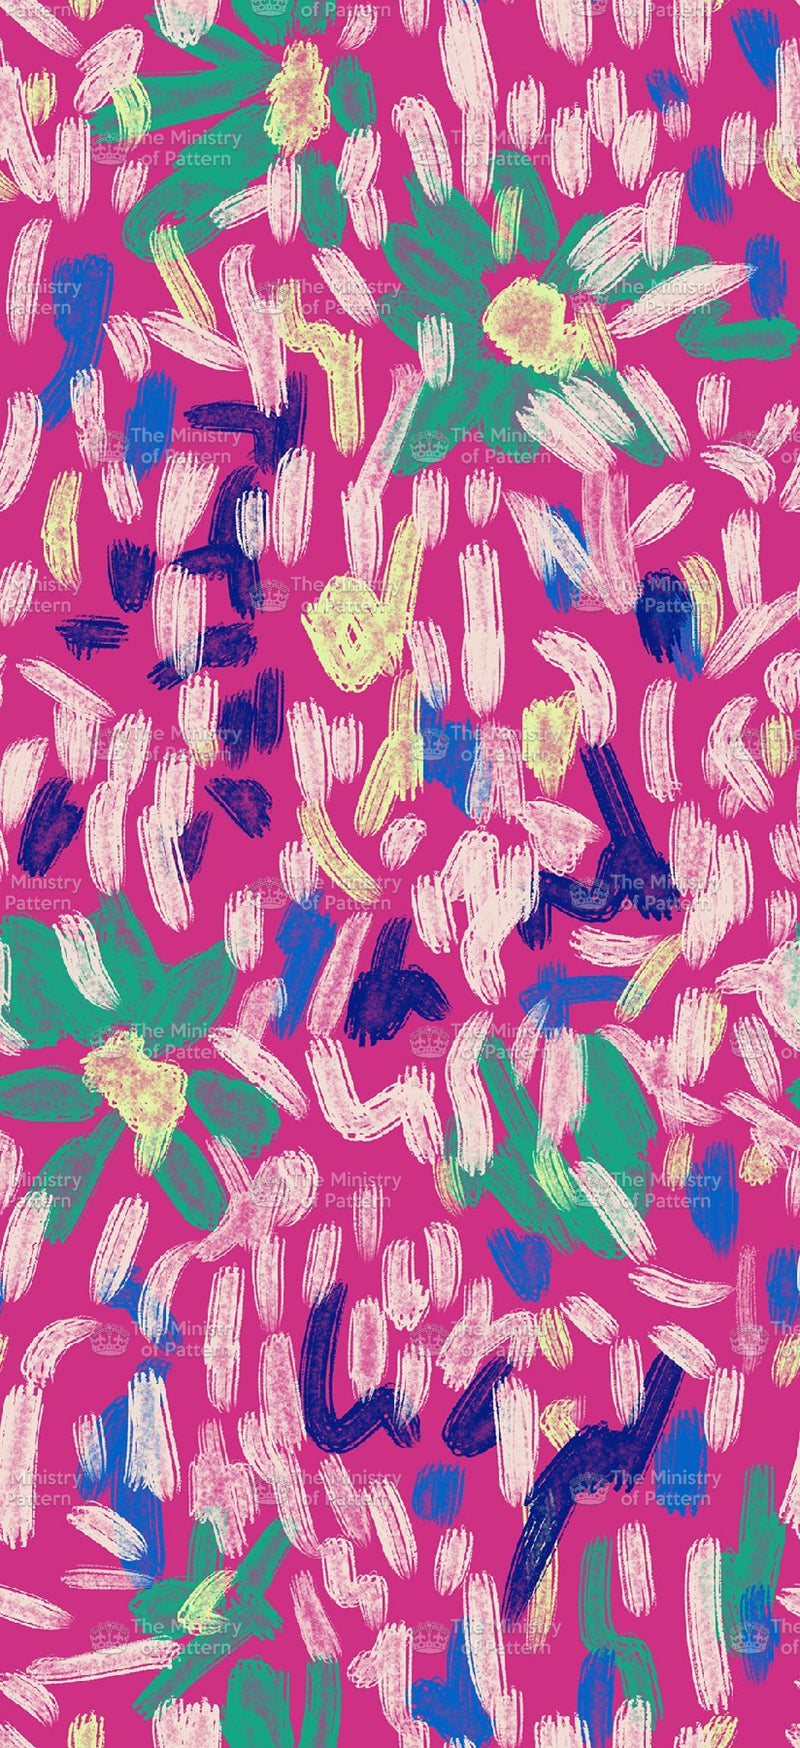 Scribble Floral - The Ministry Of Pattern - Patternsforlicensing-textilestudio-printdesignstudio-trendinspiration-digitalprintdesign-exclusivepattern-printtrends-patternoftheweek